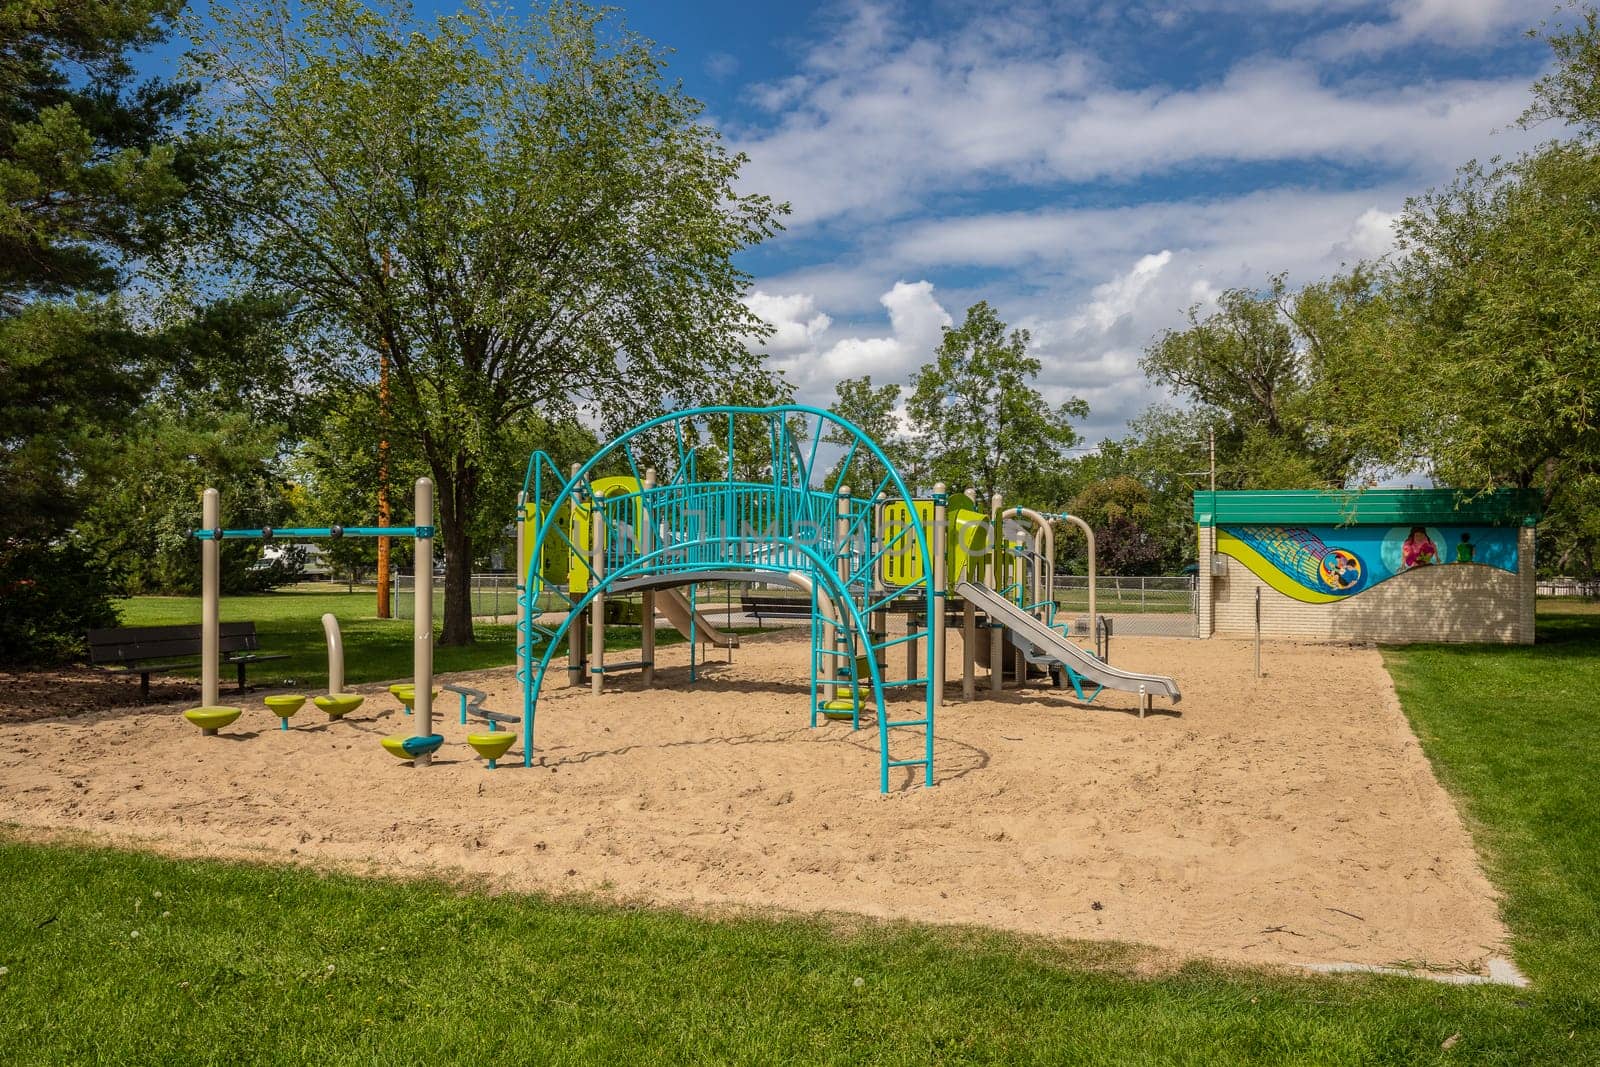 St. Andrews Park in Saskatoon, Canada by sprokop